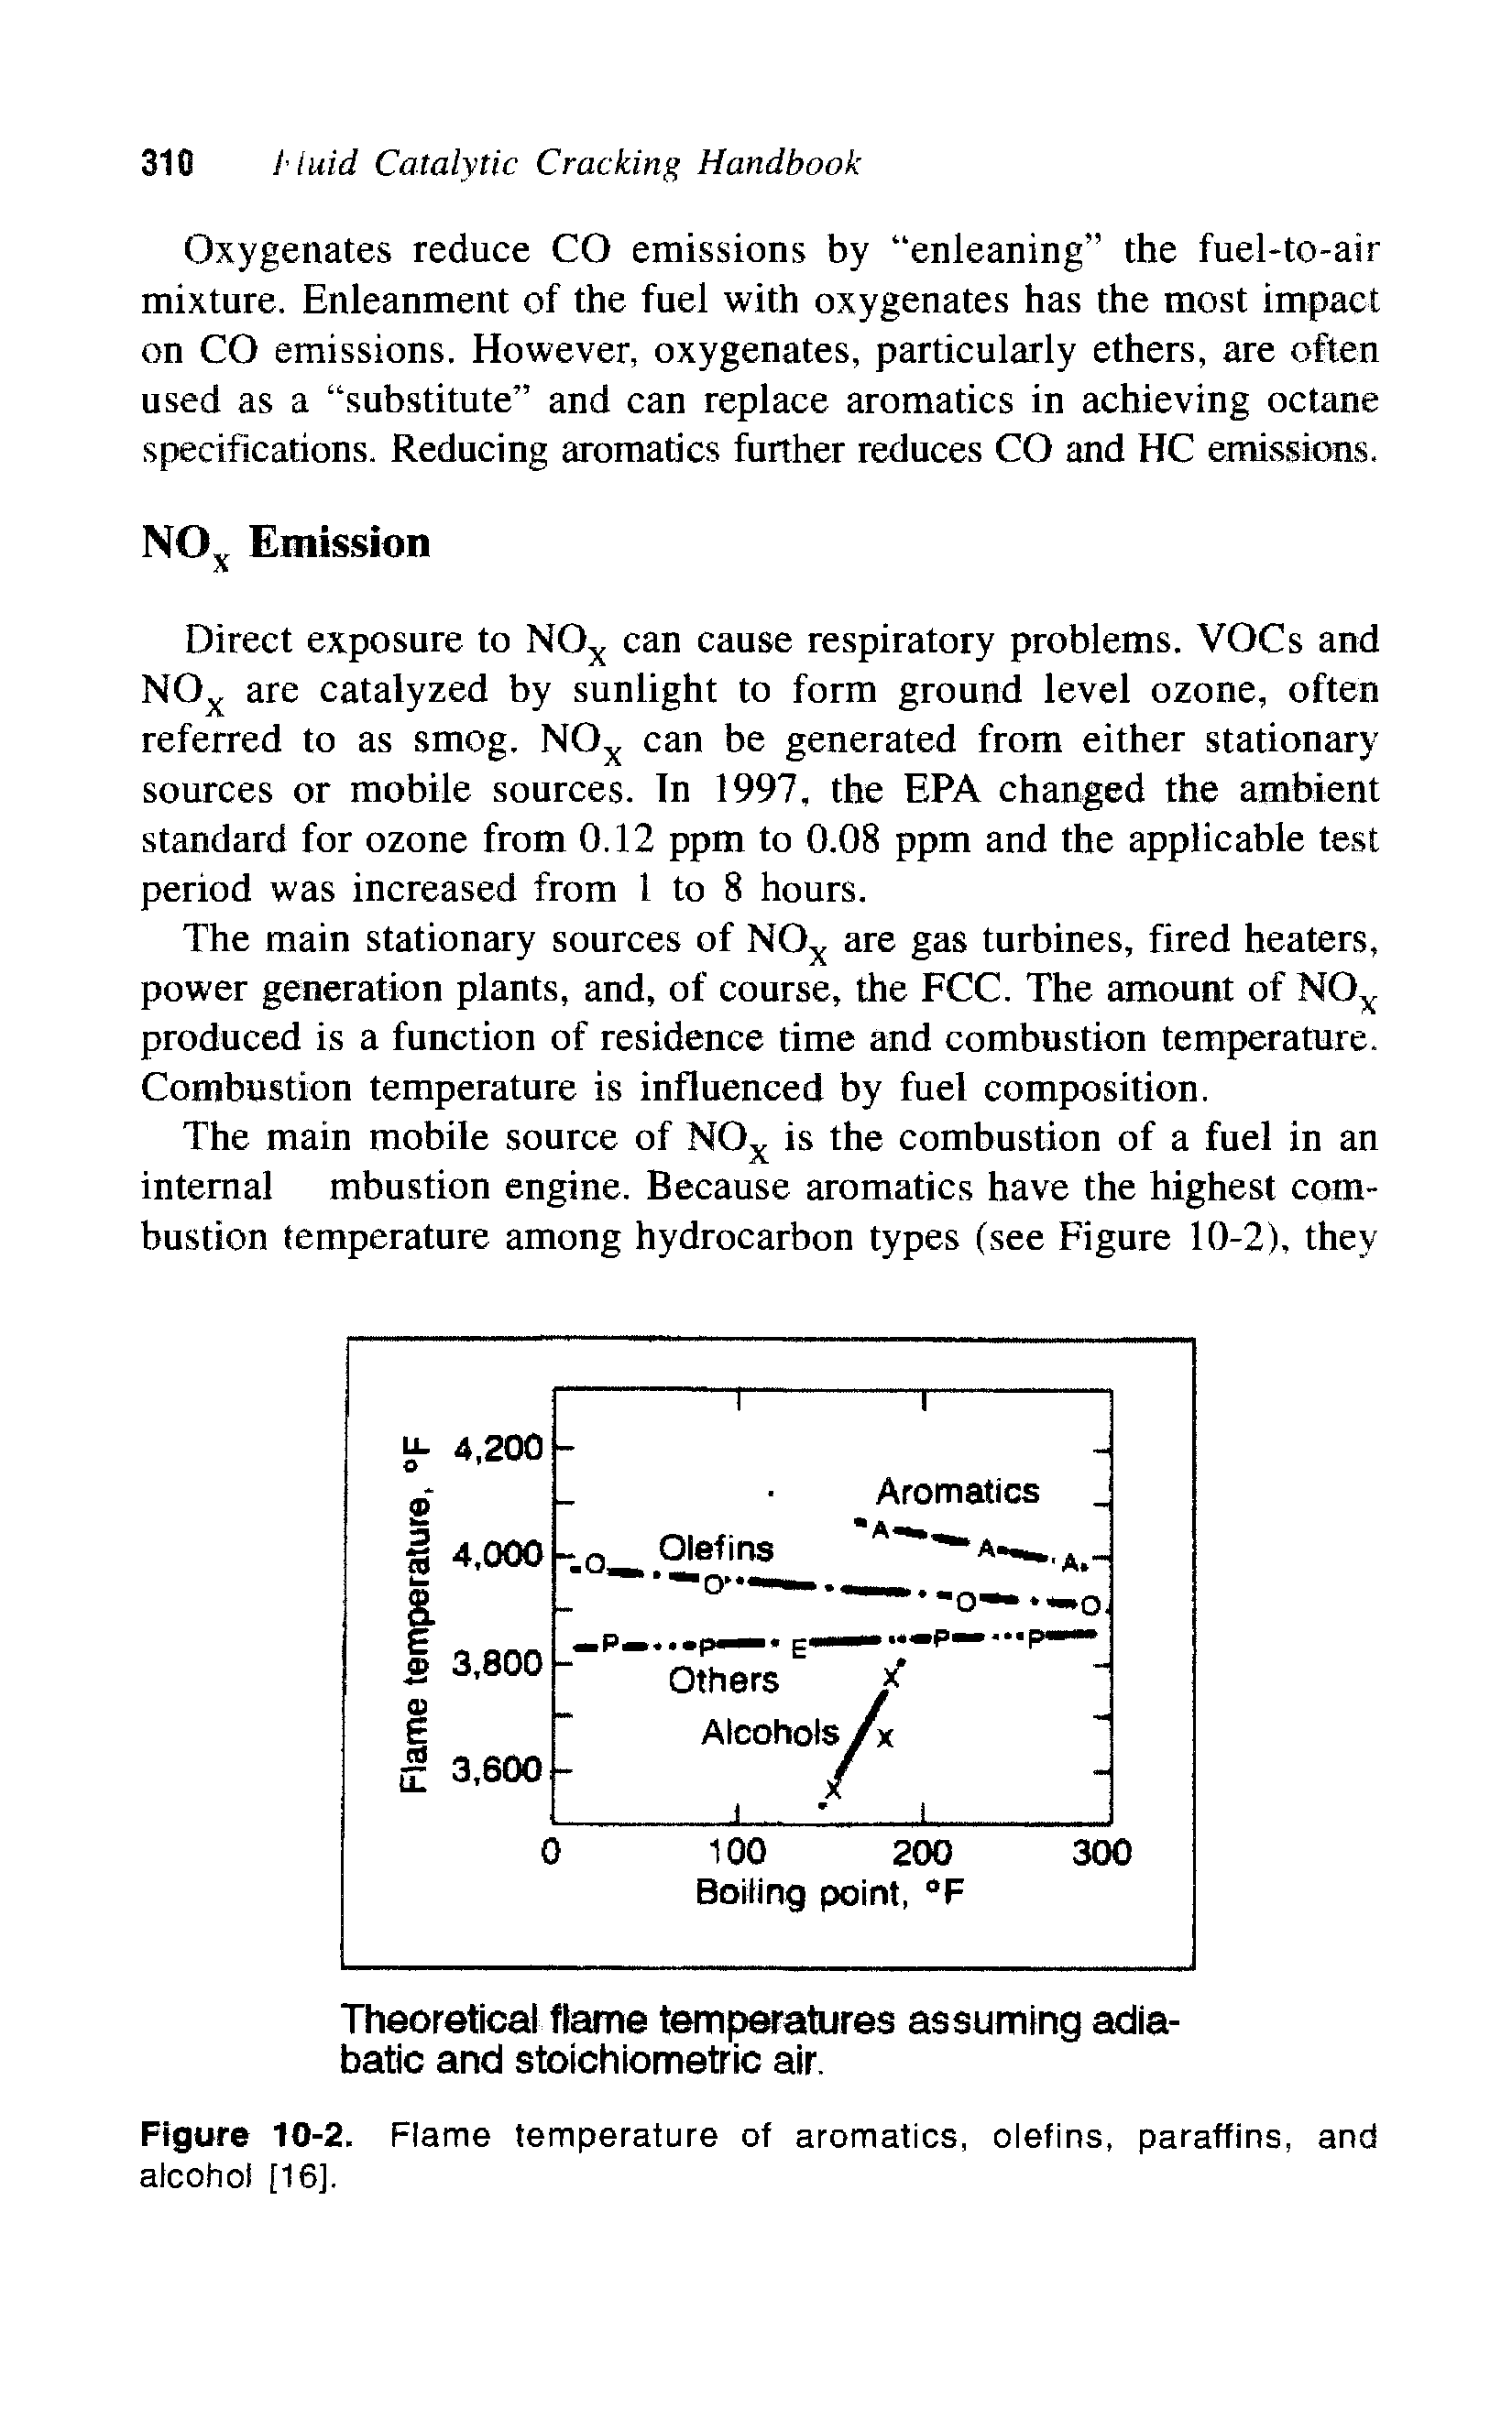 Figure 10-2. Flame temperature of aromatics, olefins, paraffins, and alcohol [16].